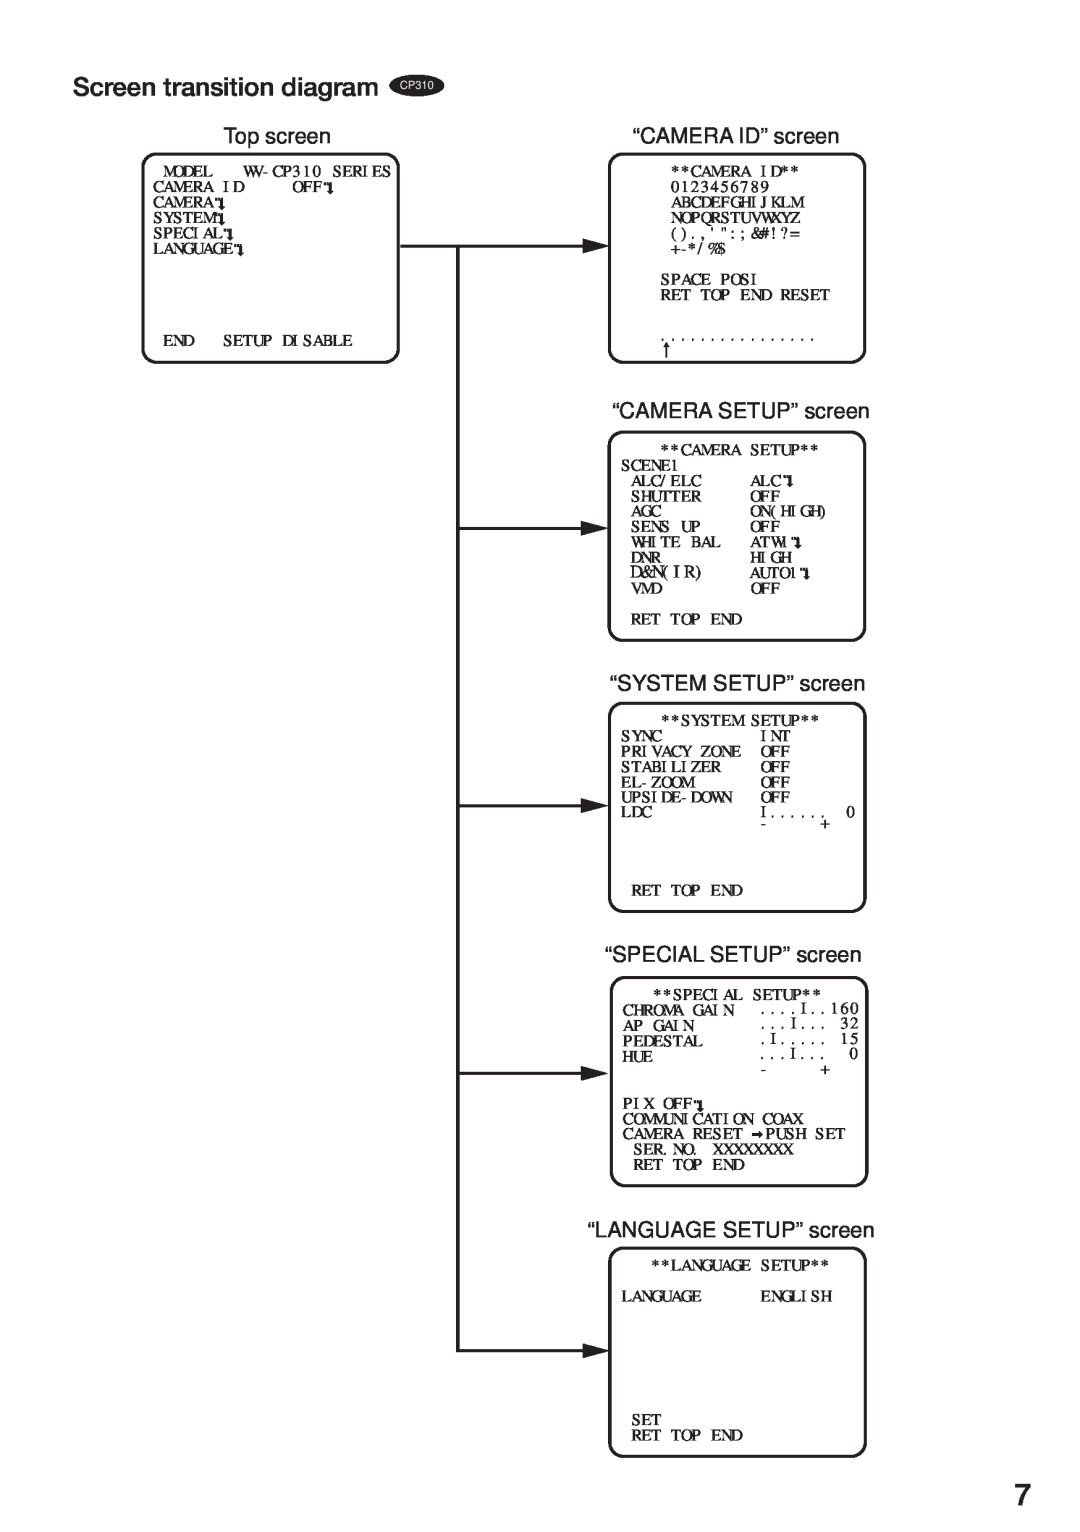 Panasonic WV-CP300, WV-CP310 Screen transition diagram CP310, Top screen, “CAMERA ID” screen, “CAMERA SETUP” screen 